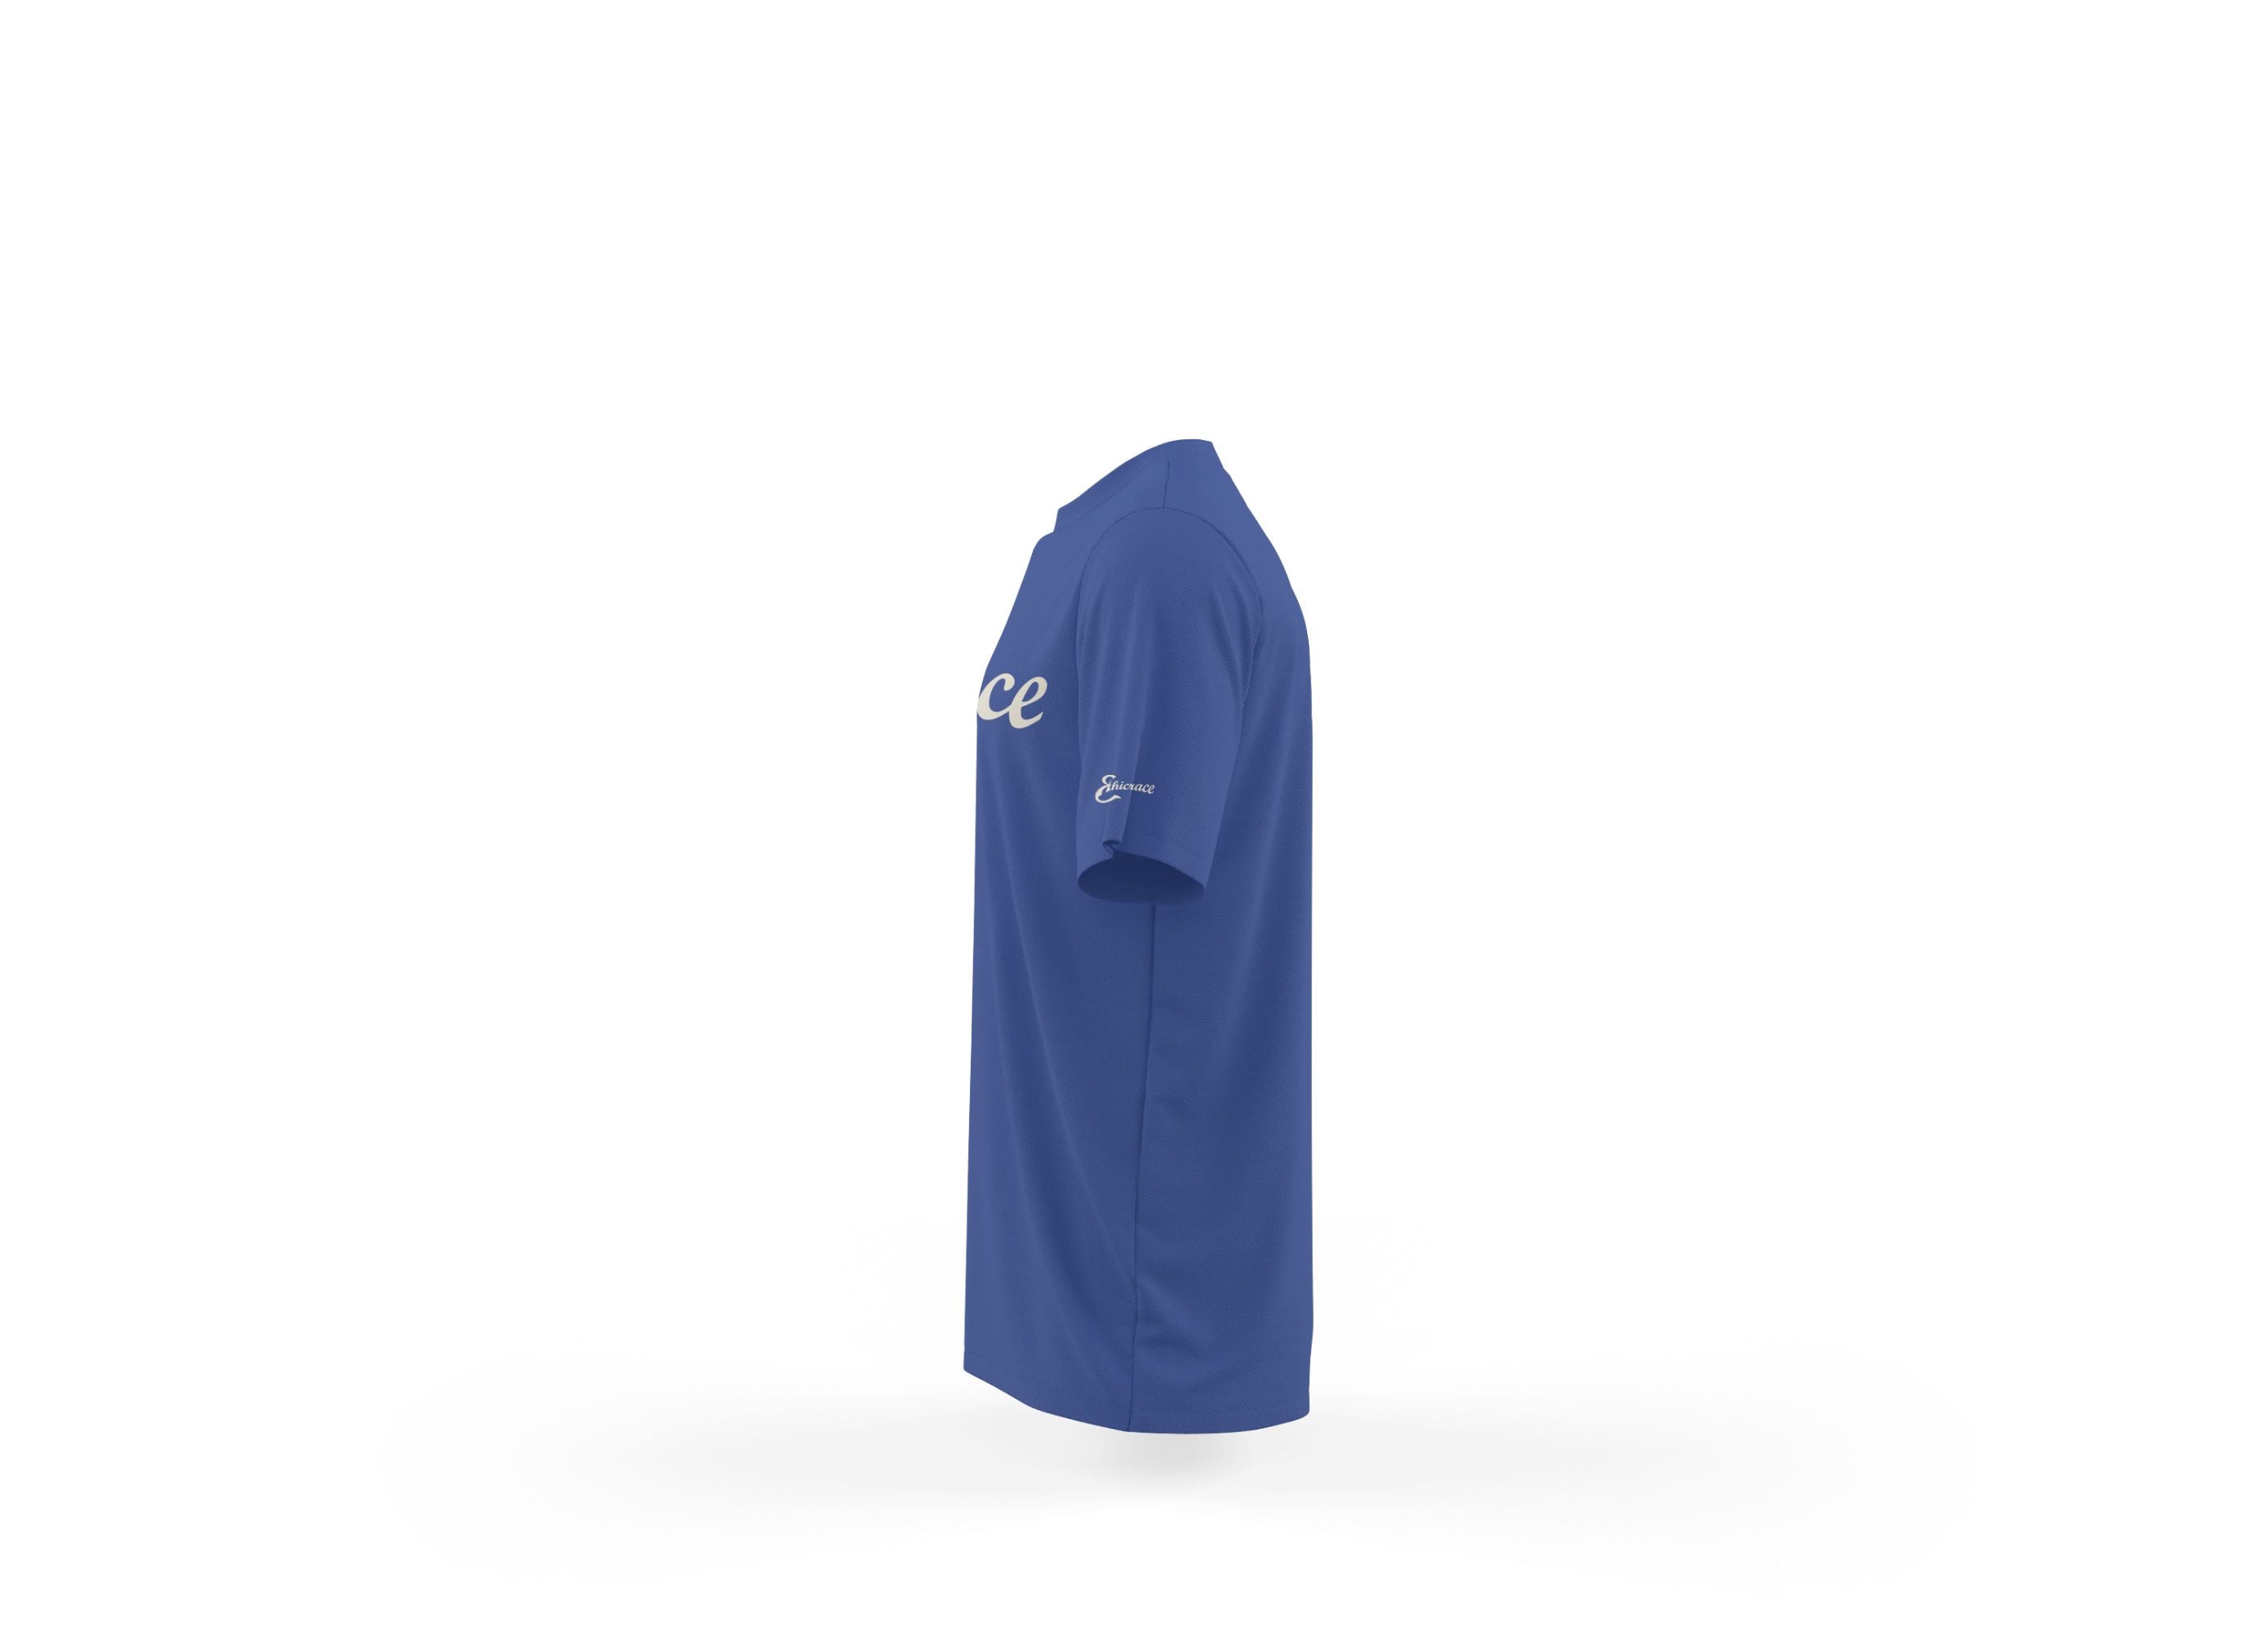 Ethicrace Cursive Logo Shirt for Men (Royal Blue)